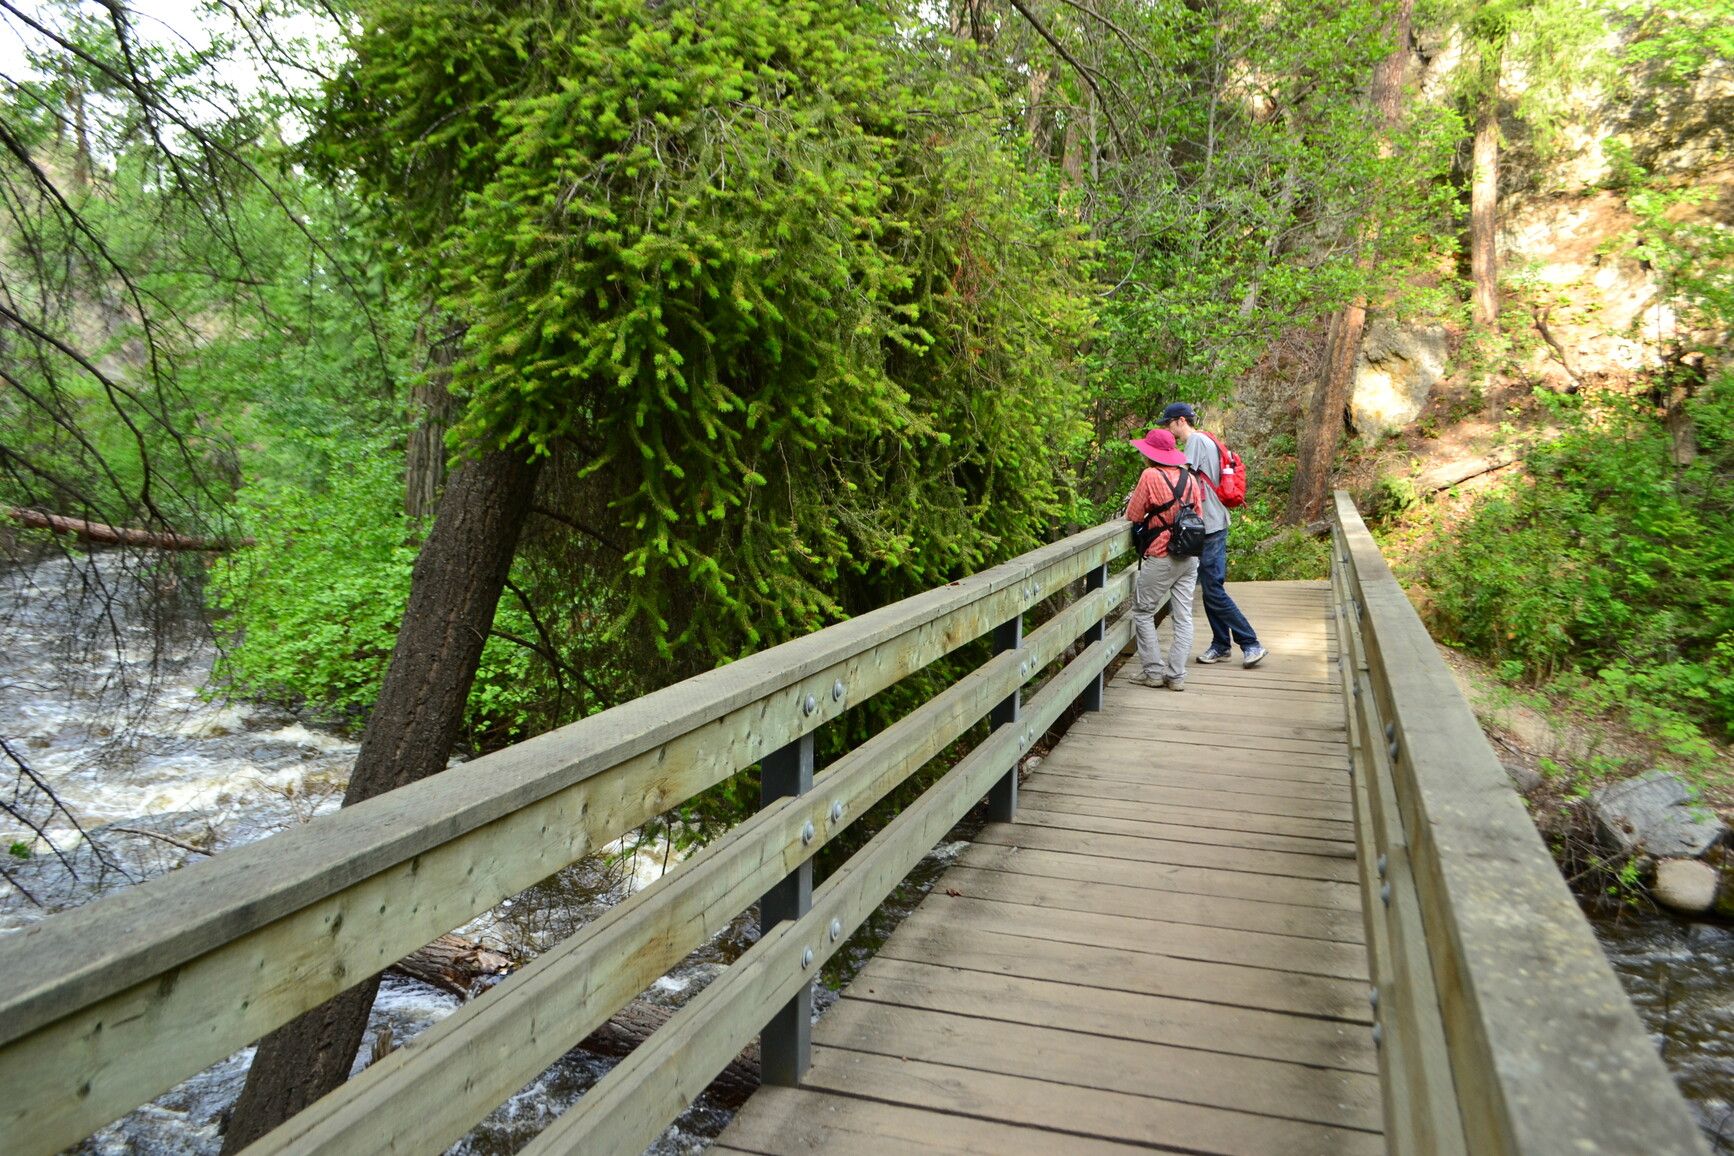 Park visitors enjoying a view of Bear Creek from a bridge.